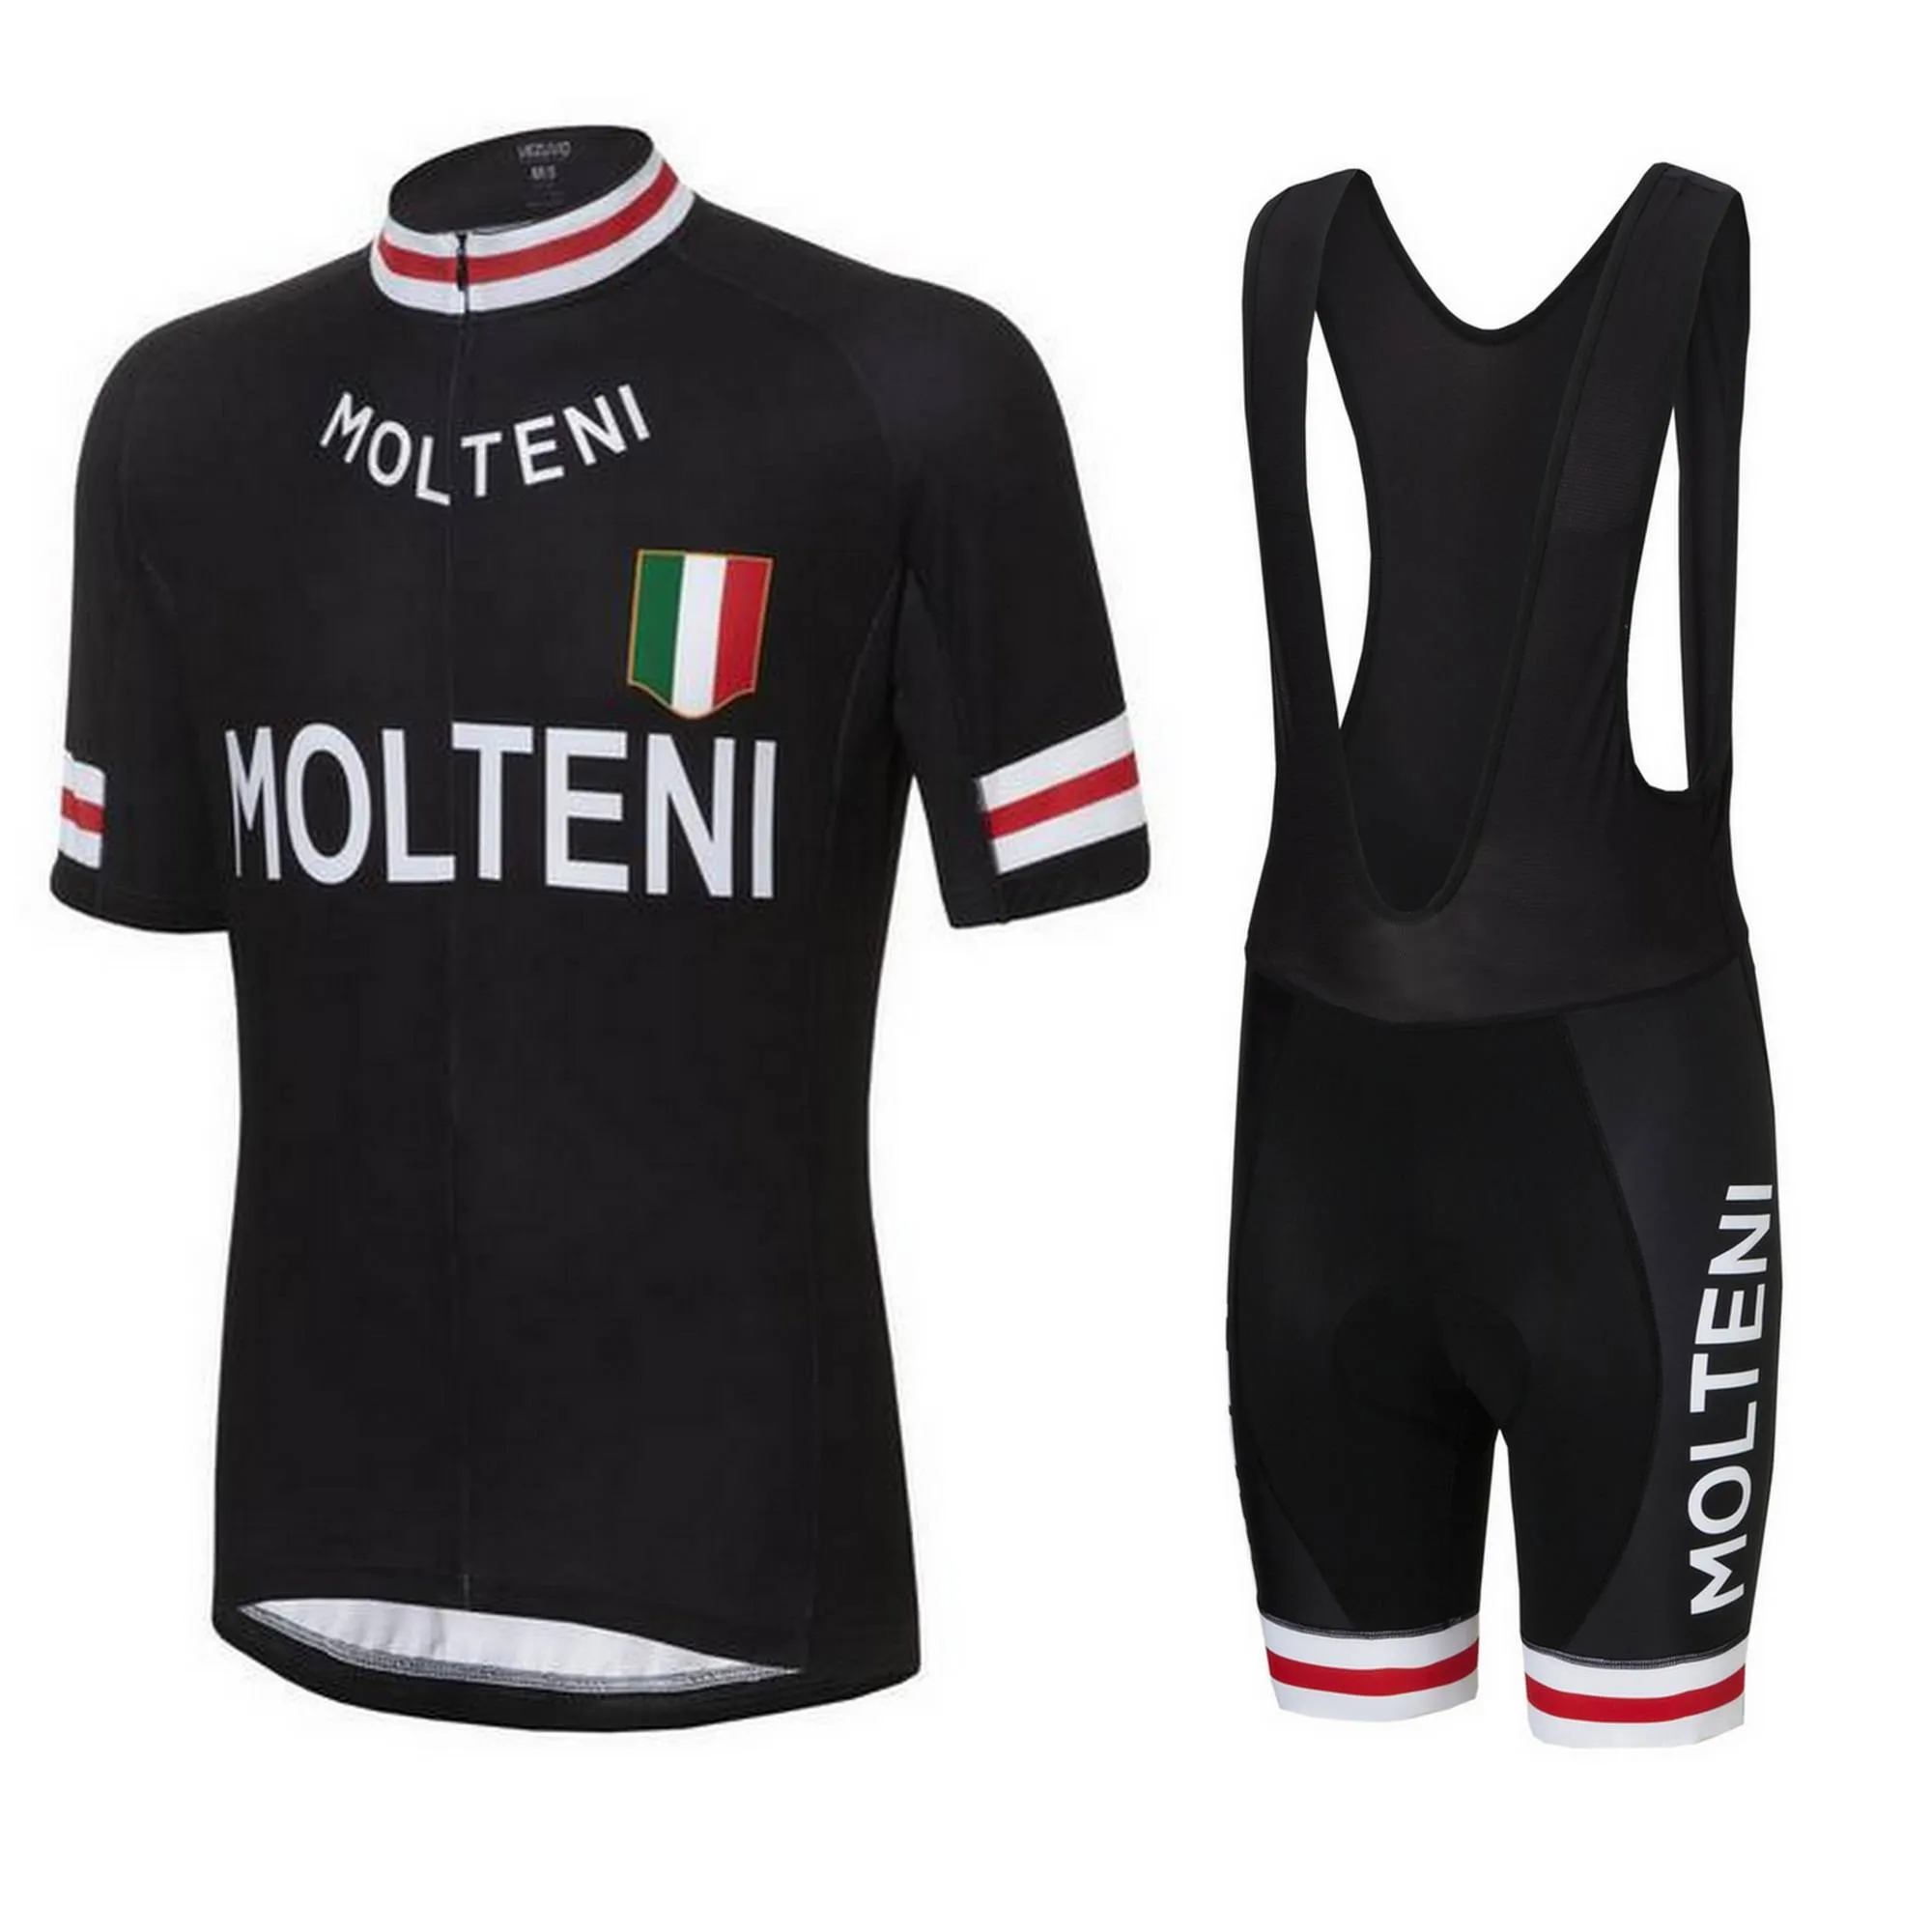 Molteni Team 2022 комплект велосипедного трикотажа с короткими рукавами, одежда для велосипеда, короткая летняя стильная велосипедная одежда для горного велосипеда, спортивная одежда D1215Z